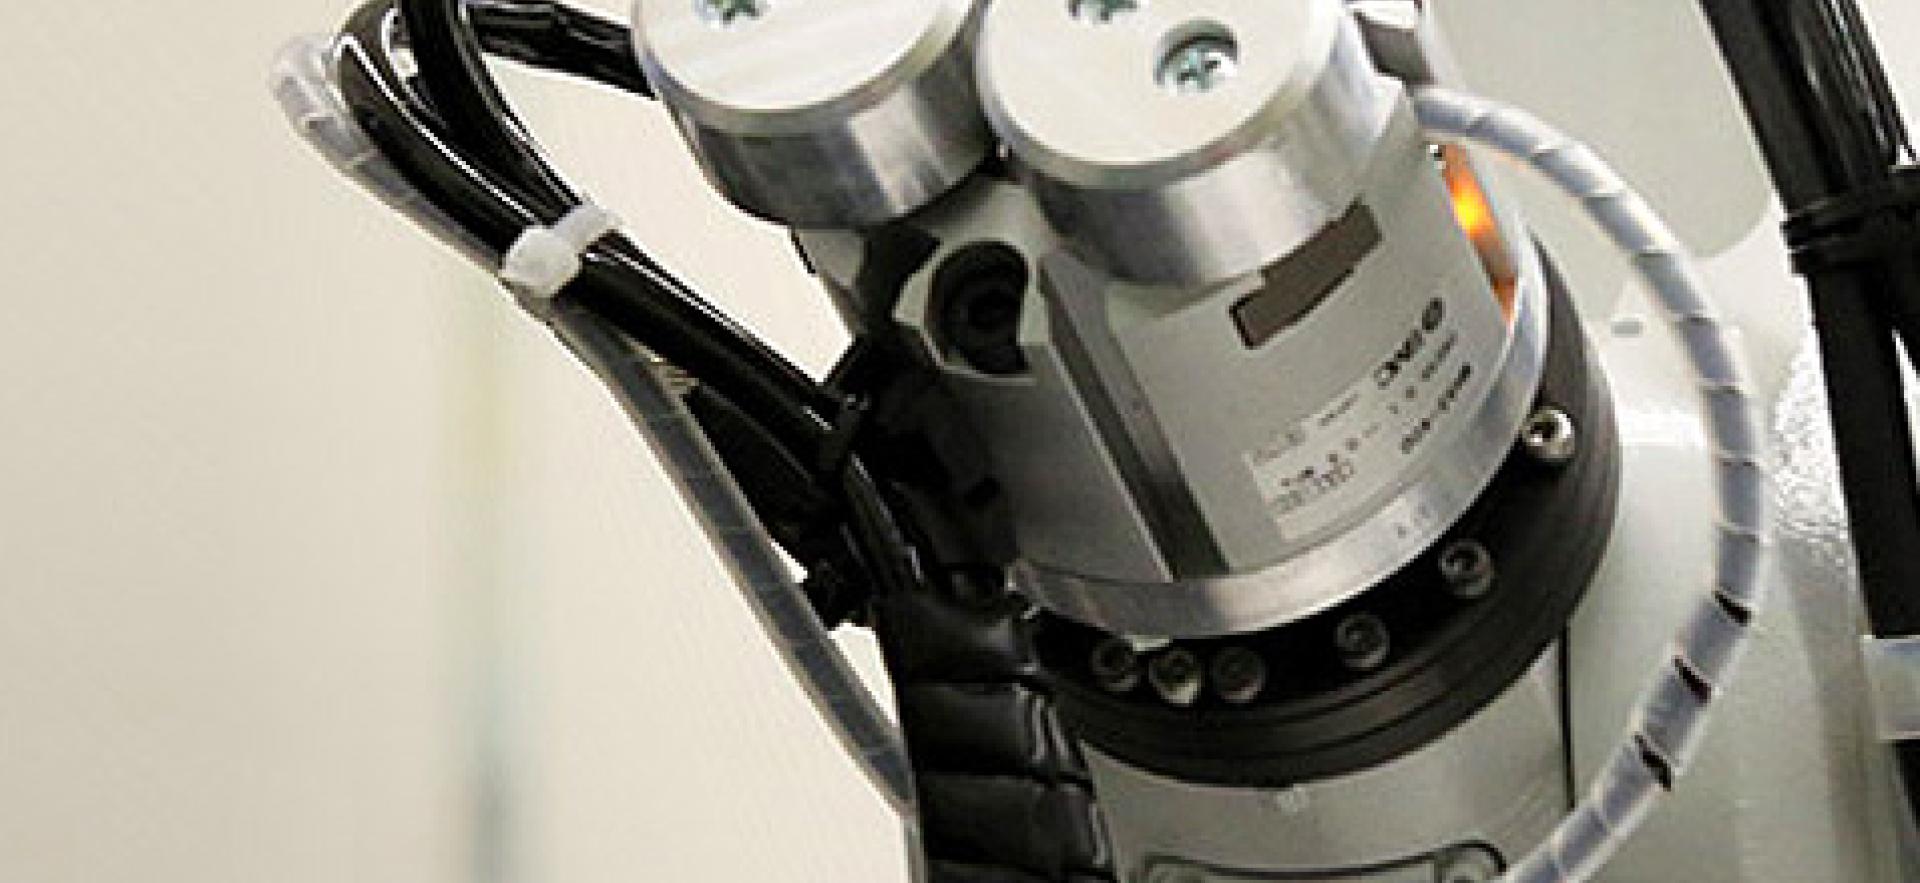 Closeup of robotic arm